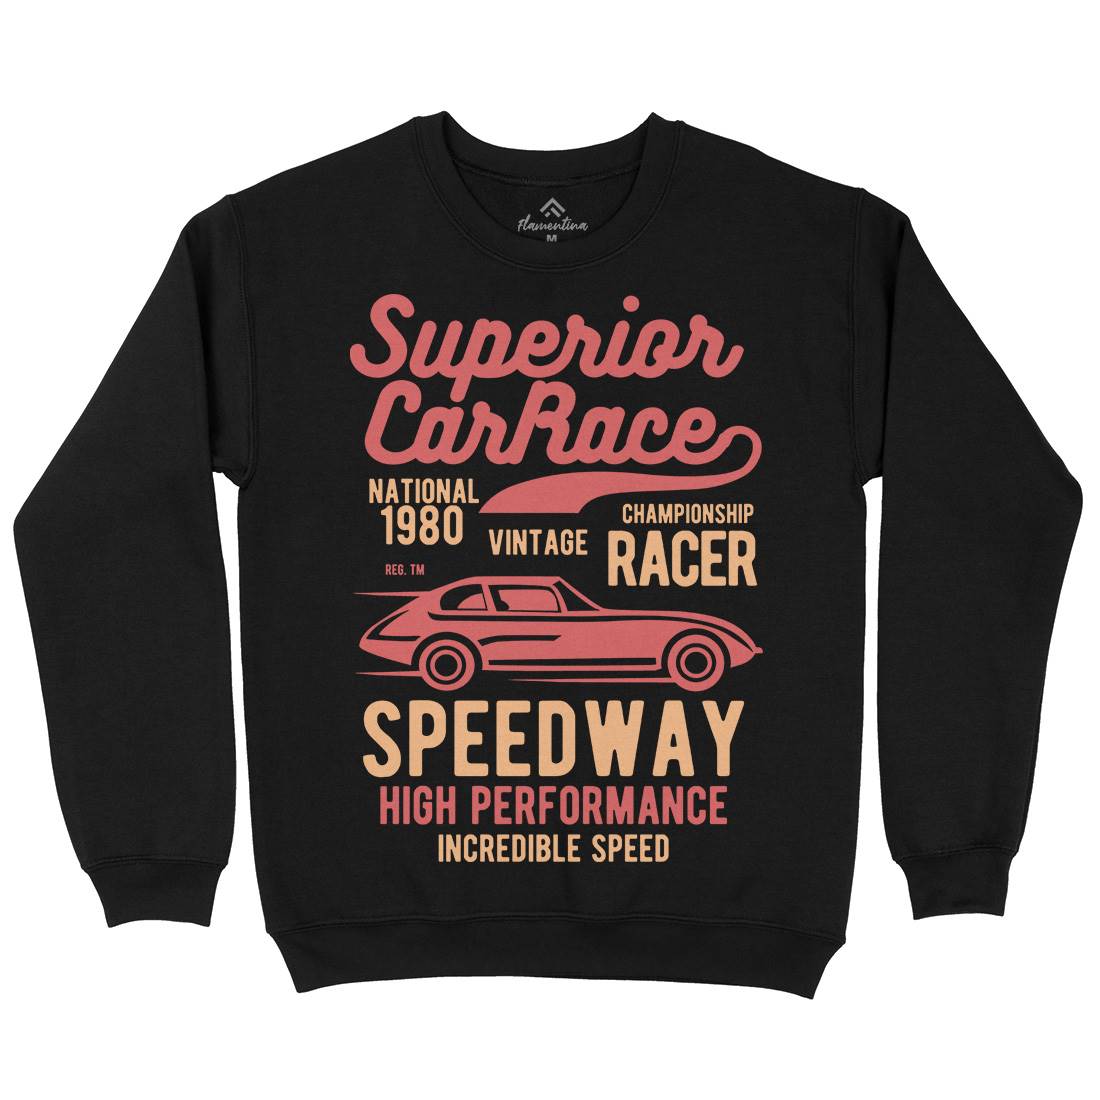 Superior Car Race Mens Crew Neck Sweatshirt Cars B456